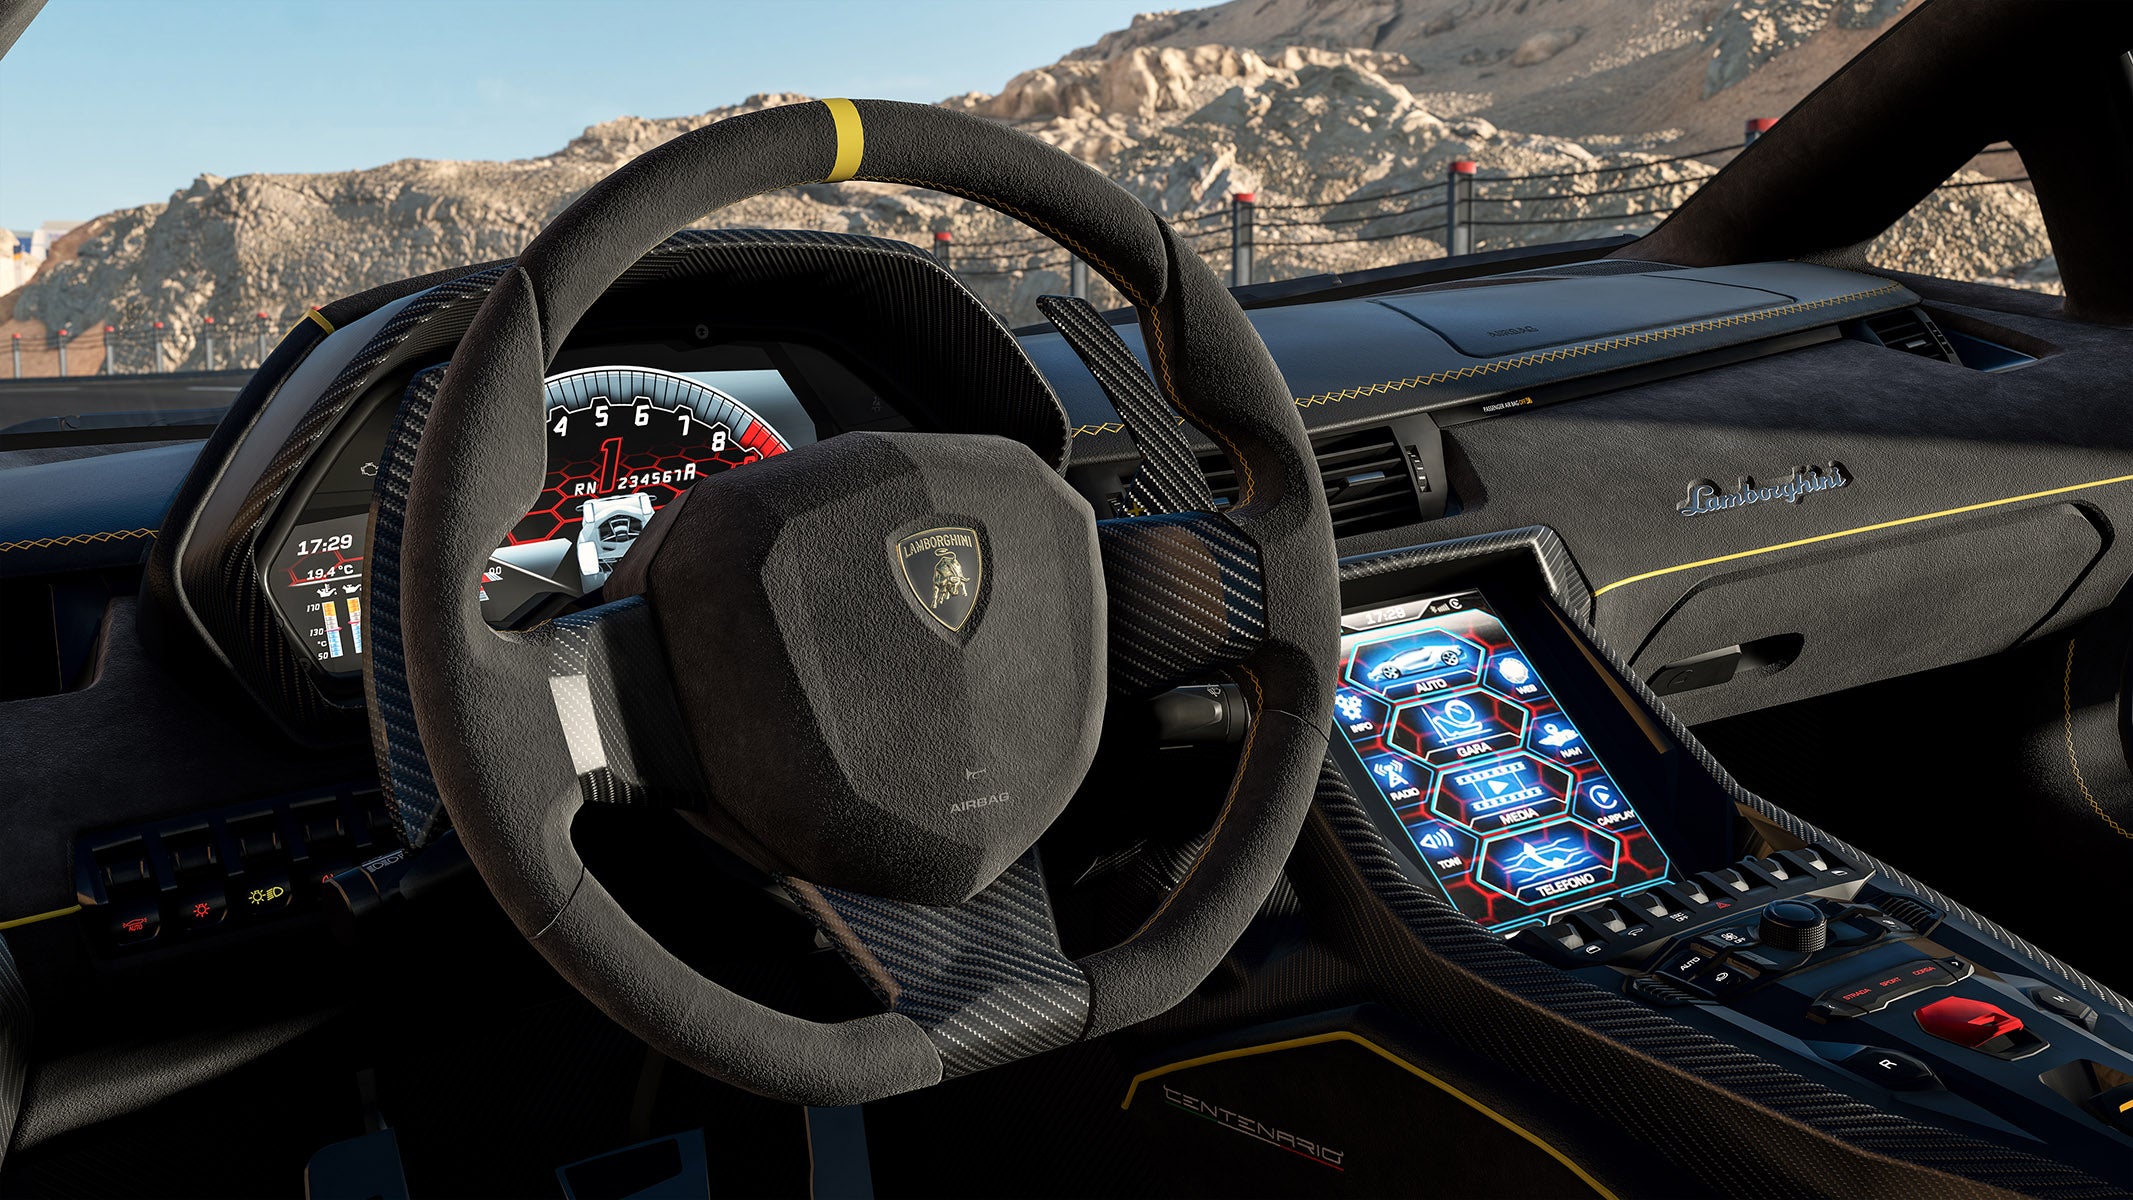 Image for Forza Motorsport 7 Xbox One X Gamescom Demo Analysis